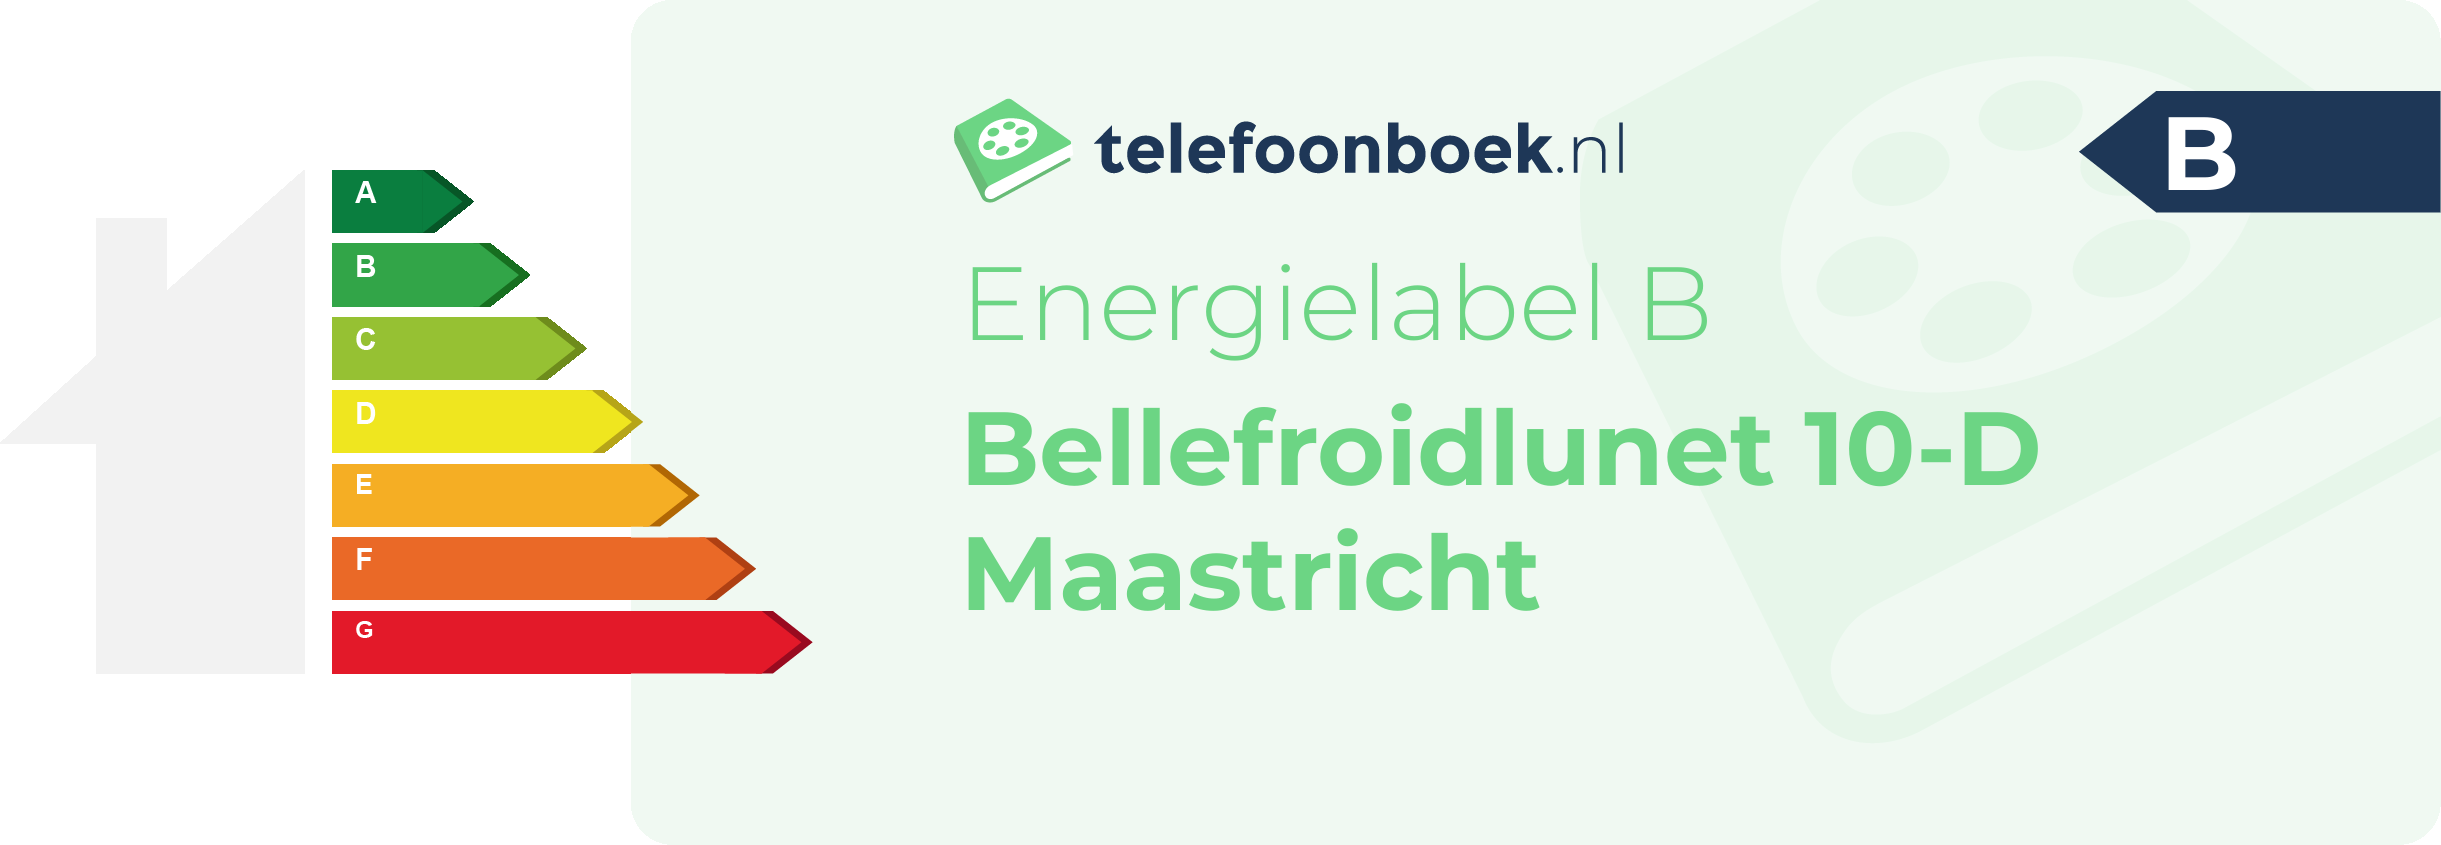 Energielabel Bellefroidlunet 10-D Maastricht